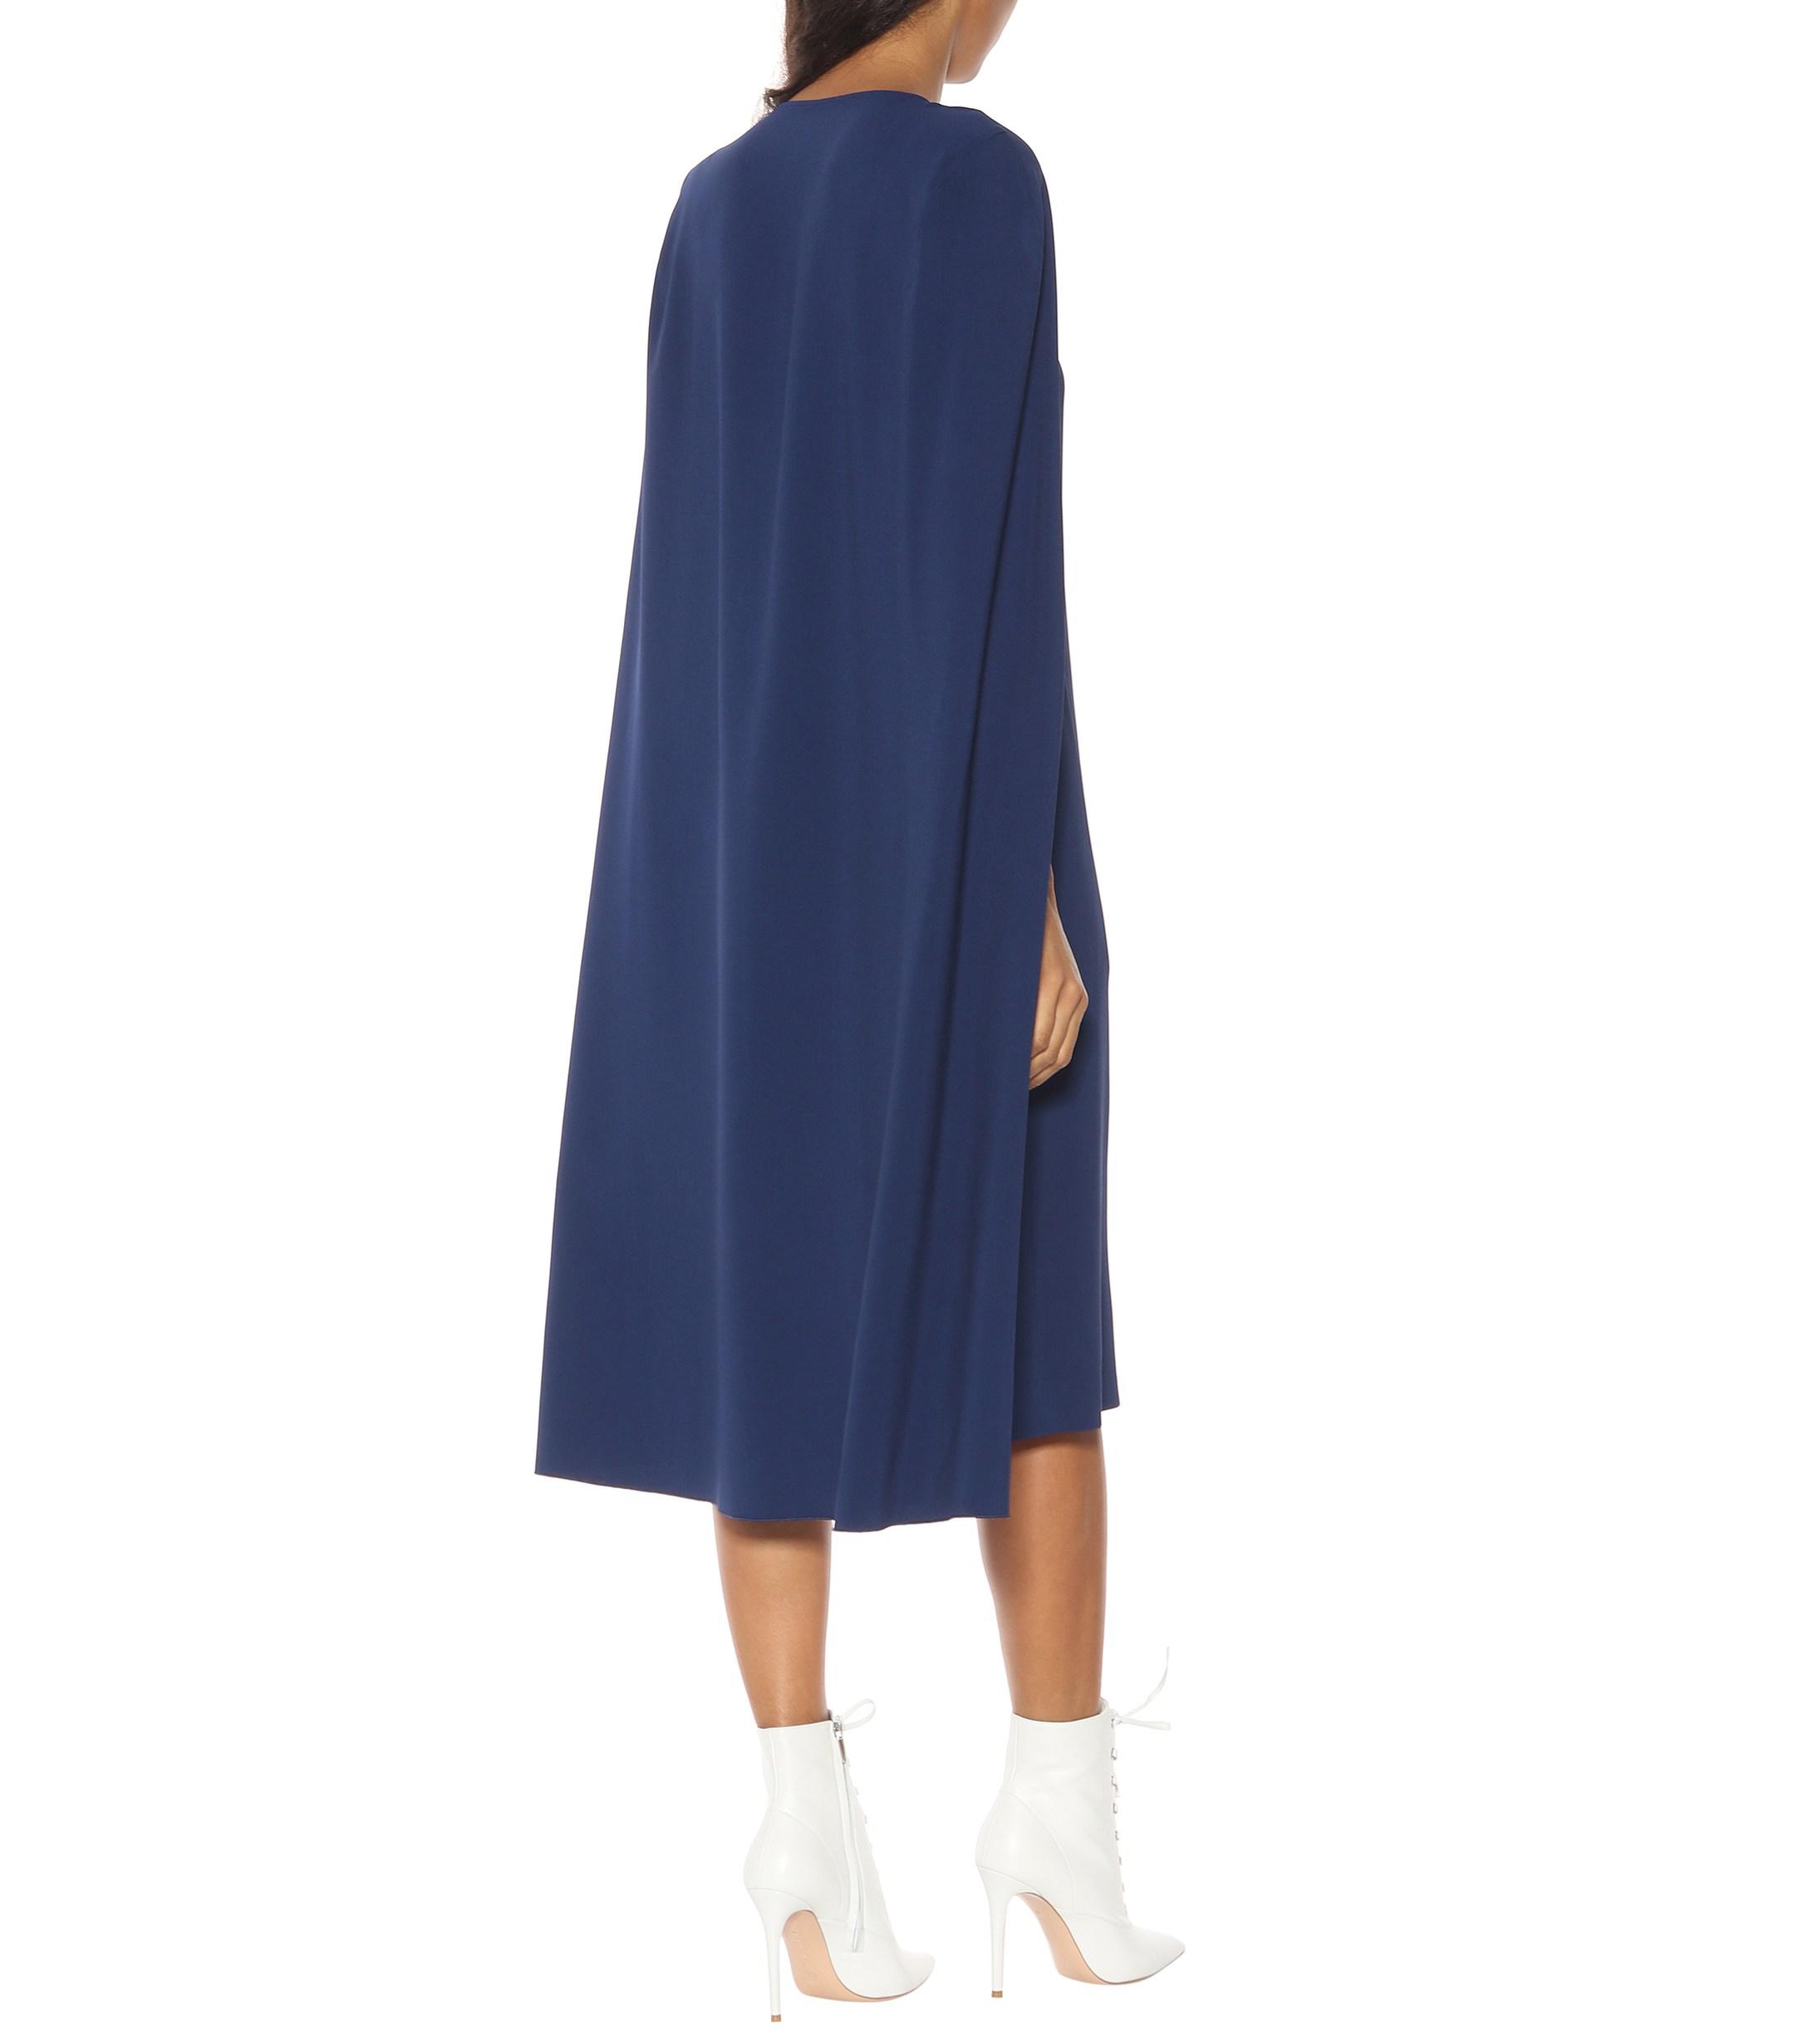 Stella McCartney Synthetic Cape Midi Dress in Blue - Lyst